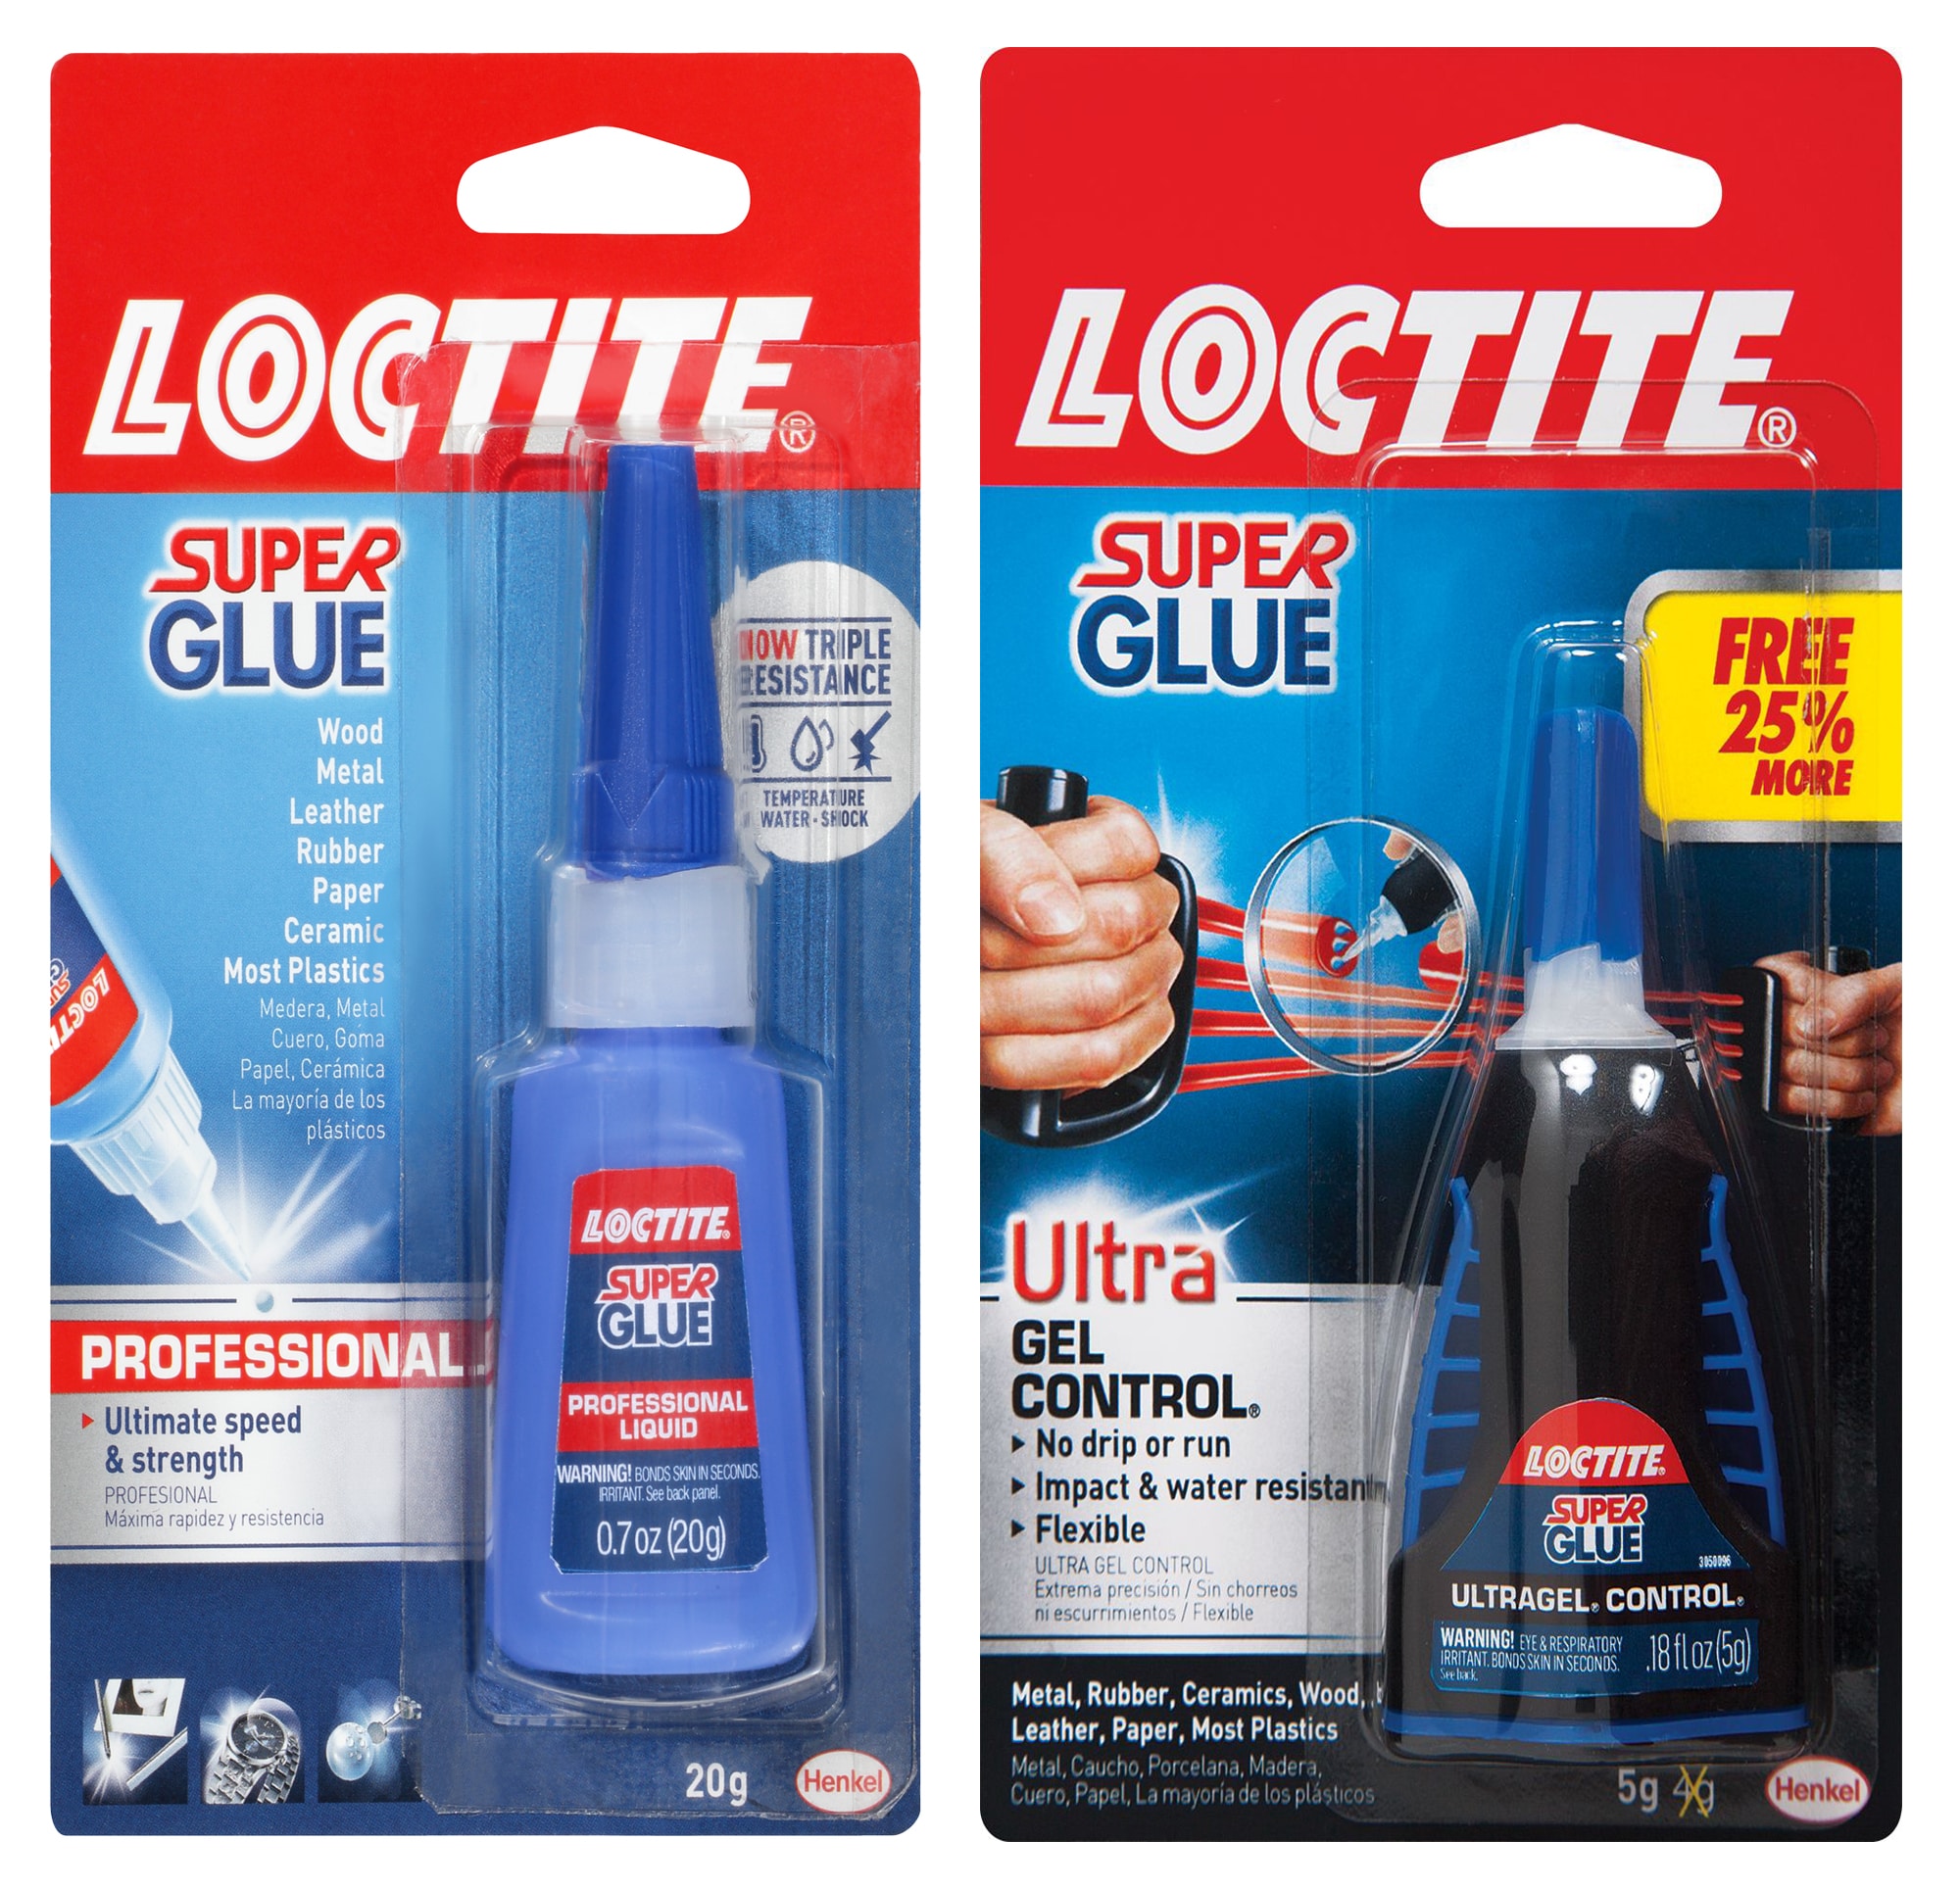 LOCTITE Ultra Gel Control Super Glue, 1 Bottle with Professional Liquid  Super Glue, 1 Bottle